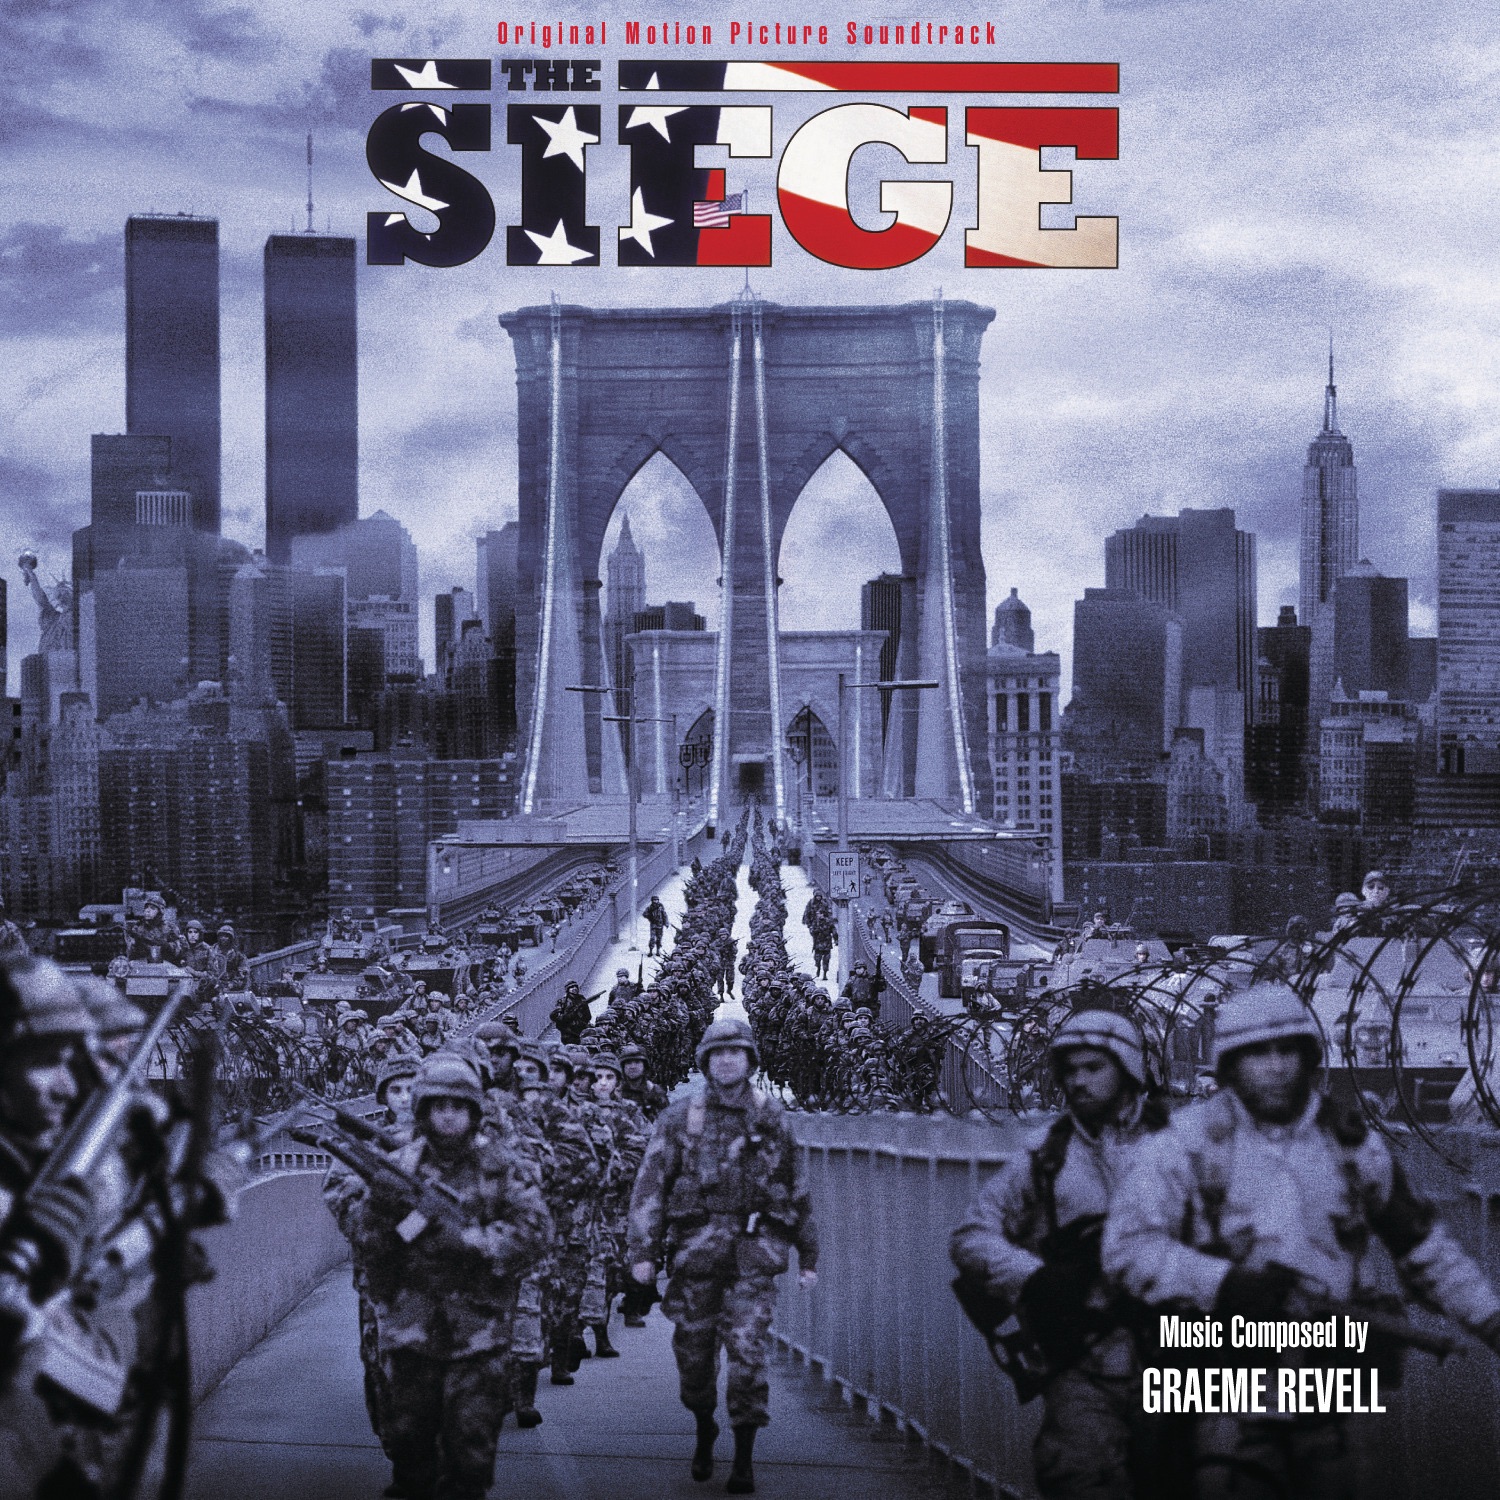 Graeme revell 2. Siege группа. The Siege OST. Graeme Revell. Siege of Power альбомы обложки.